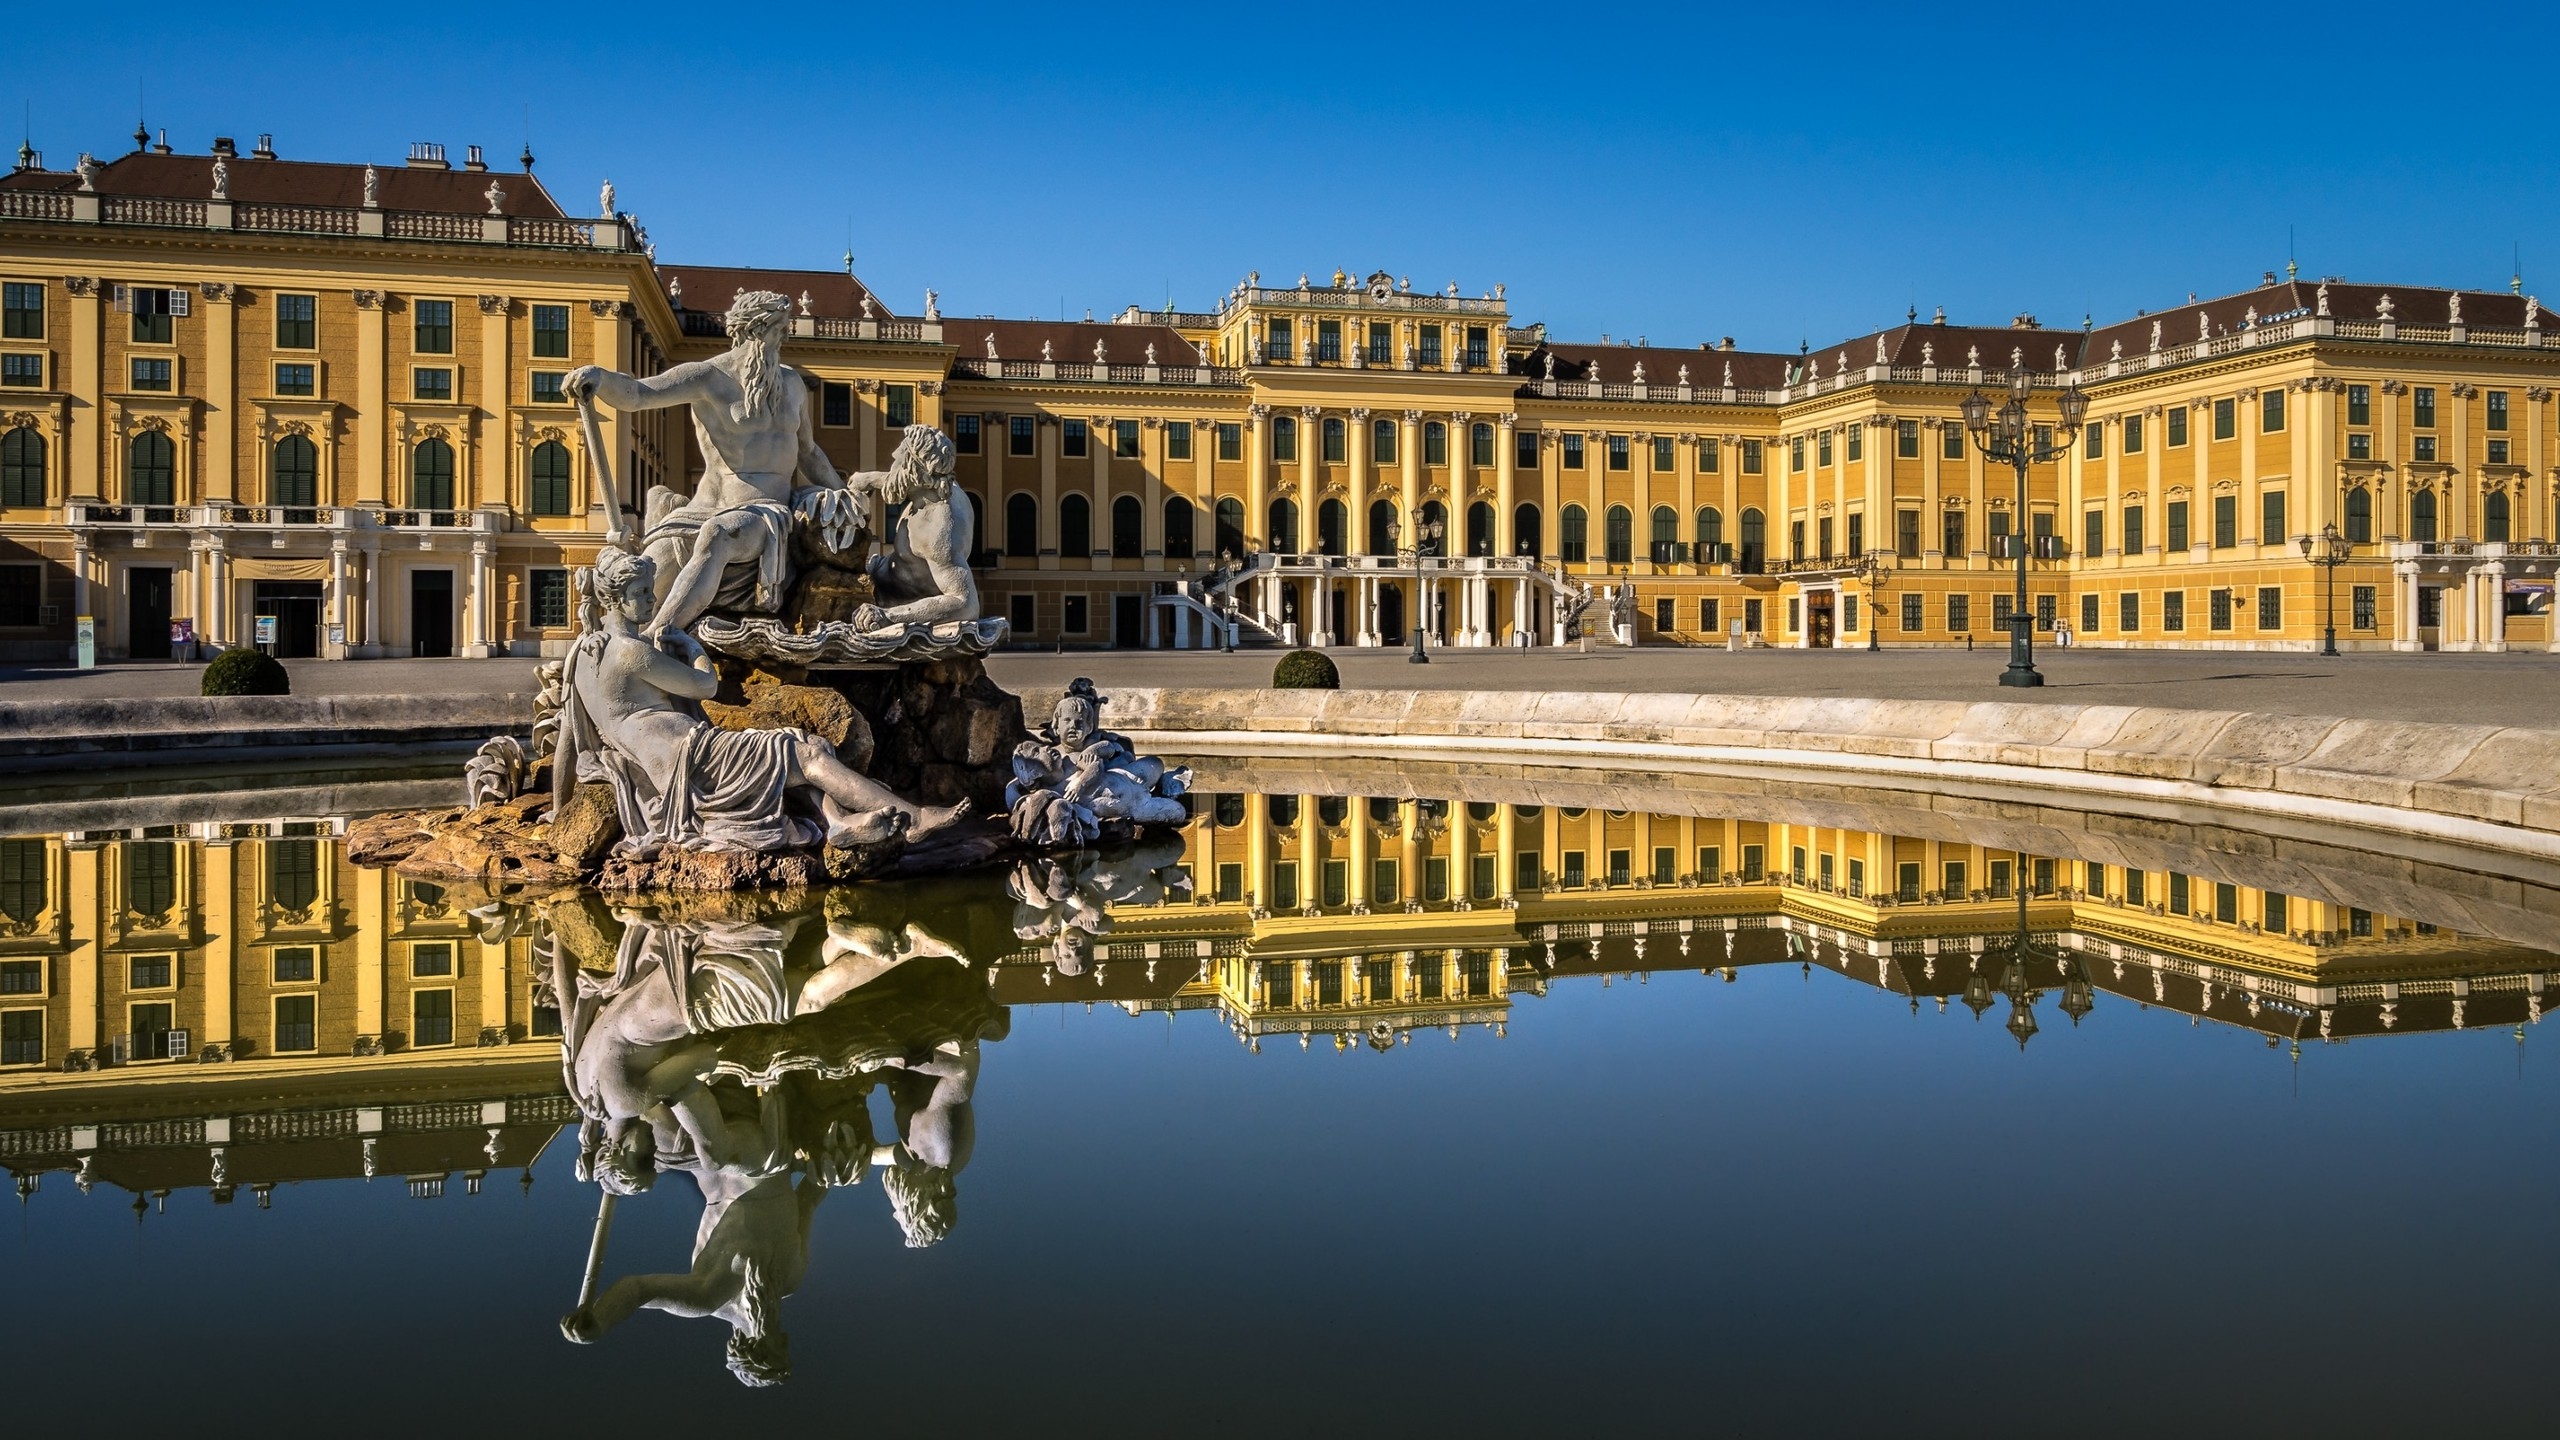 Schonbrunn Palace View for 2560x1440 HDTV resolution